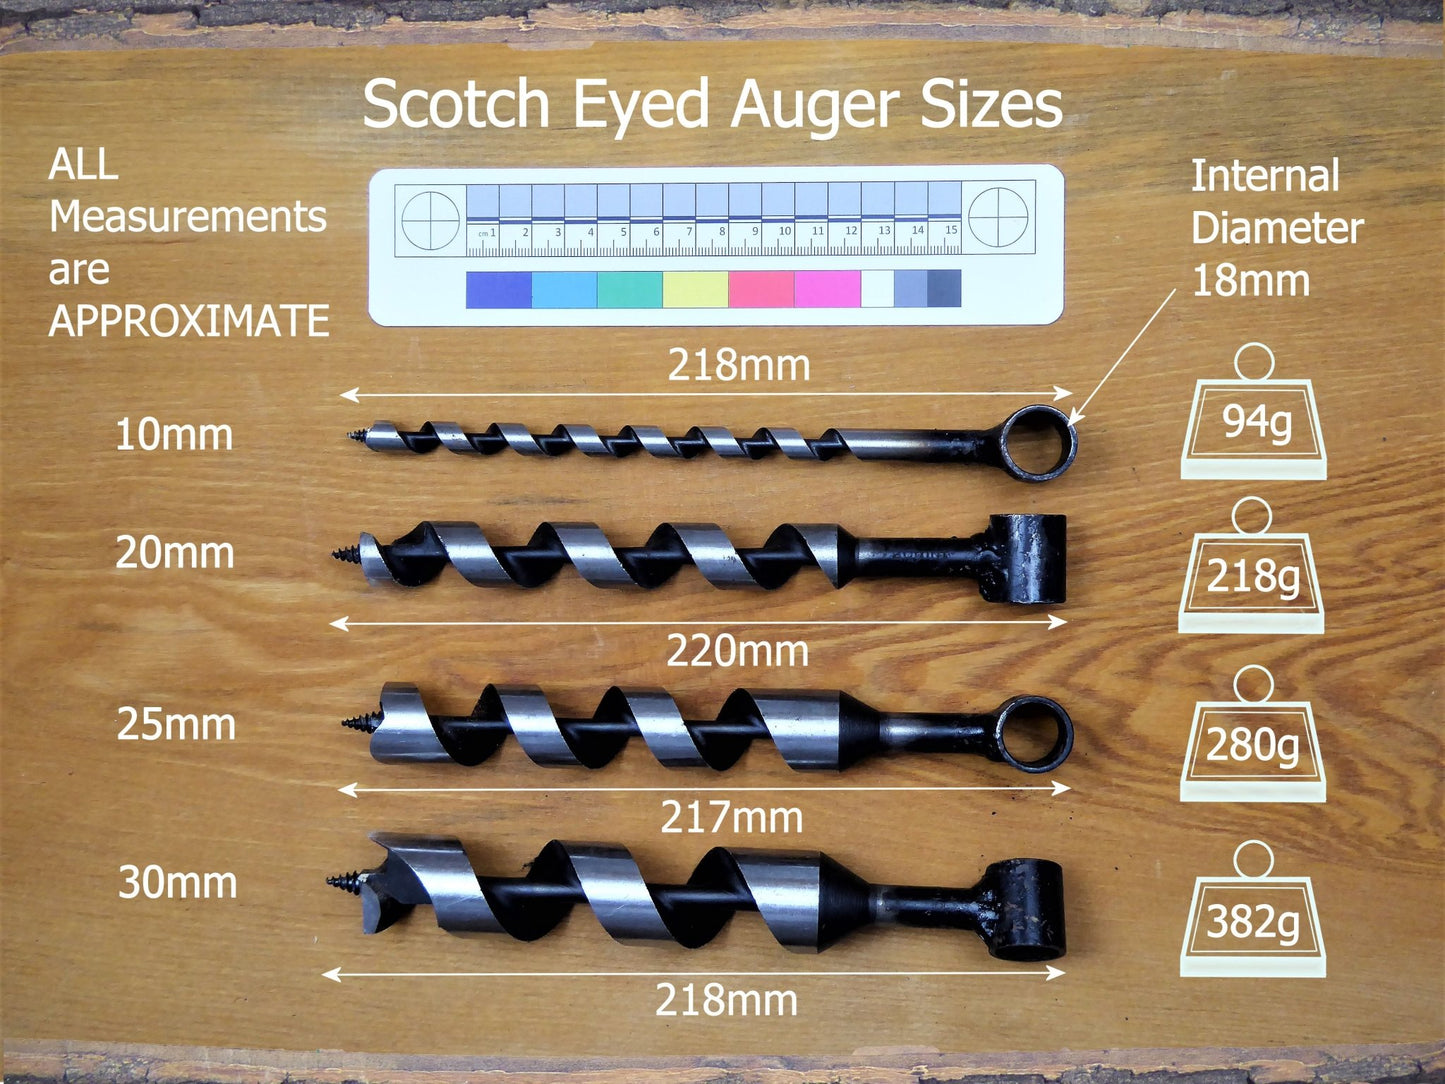 10mm Scotch Eyed Auger off grid tool compact, versatile Auger Huggins Attic    [Huggins attic]